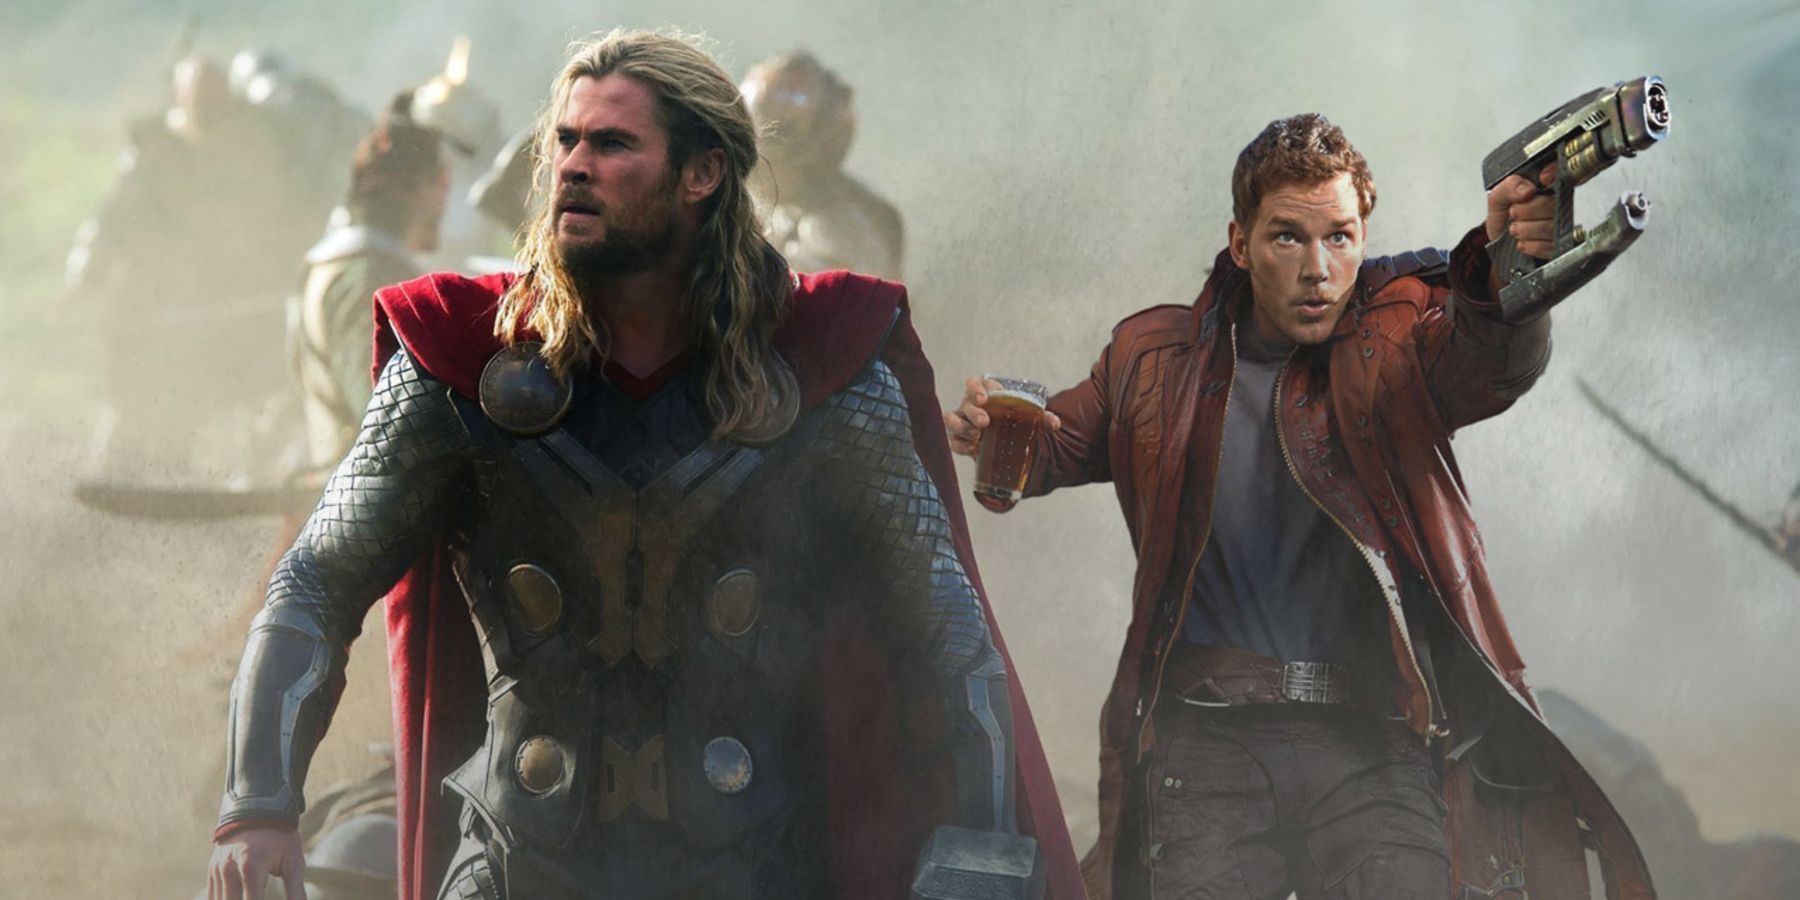 Chris Pratt as Star Lord and Chris Hemsworth as Thor in the MCU